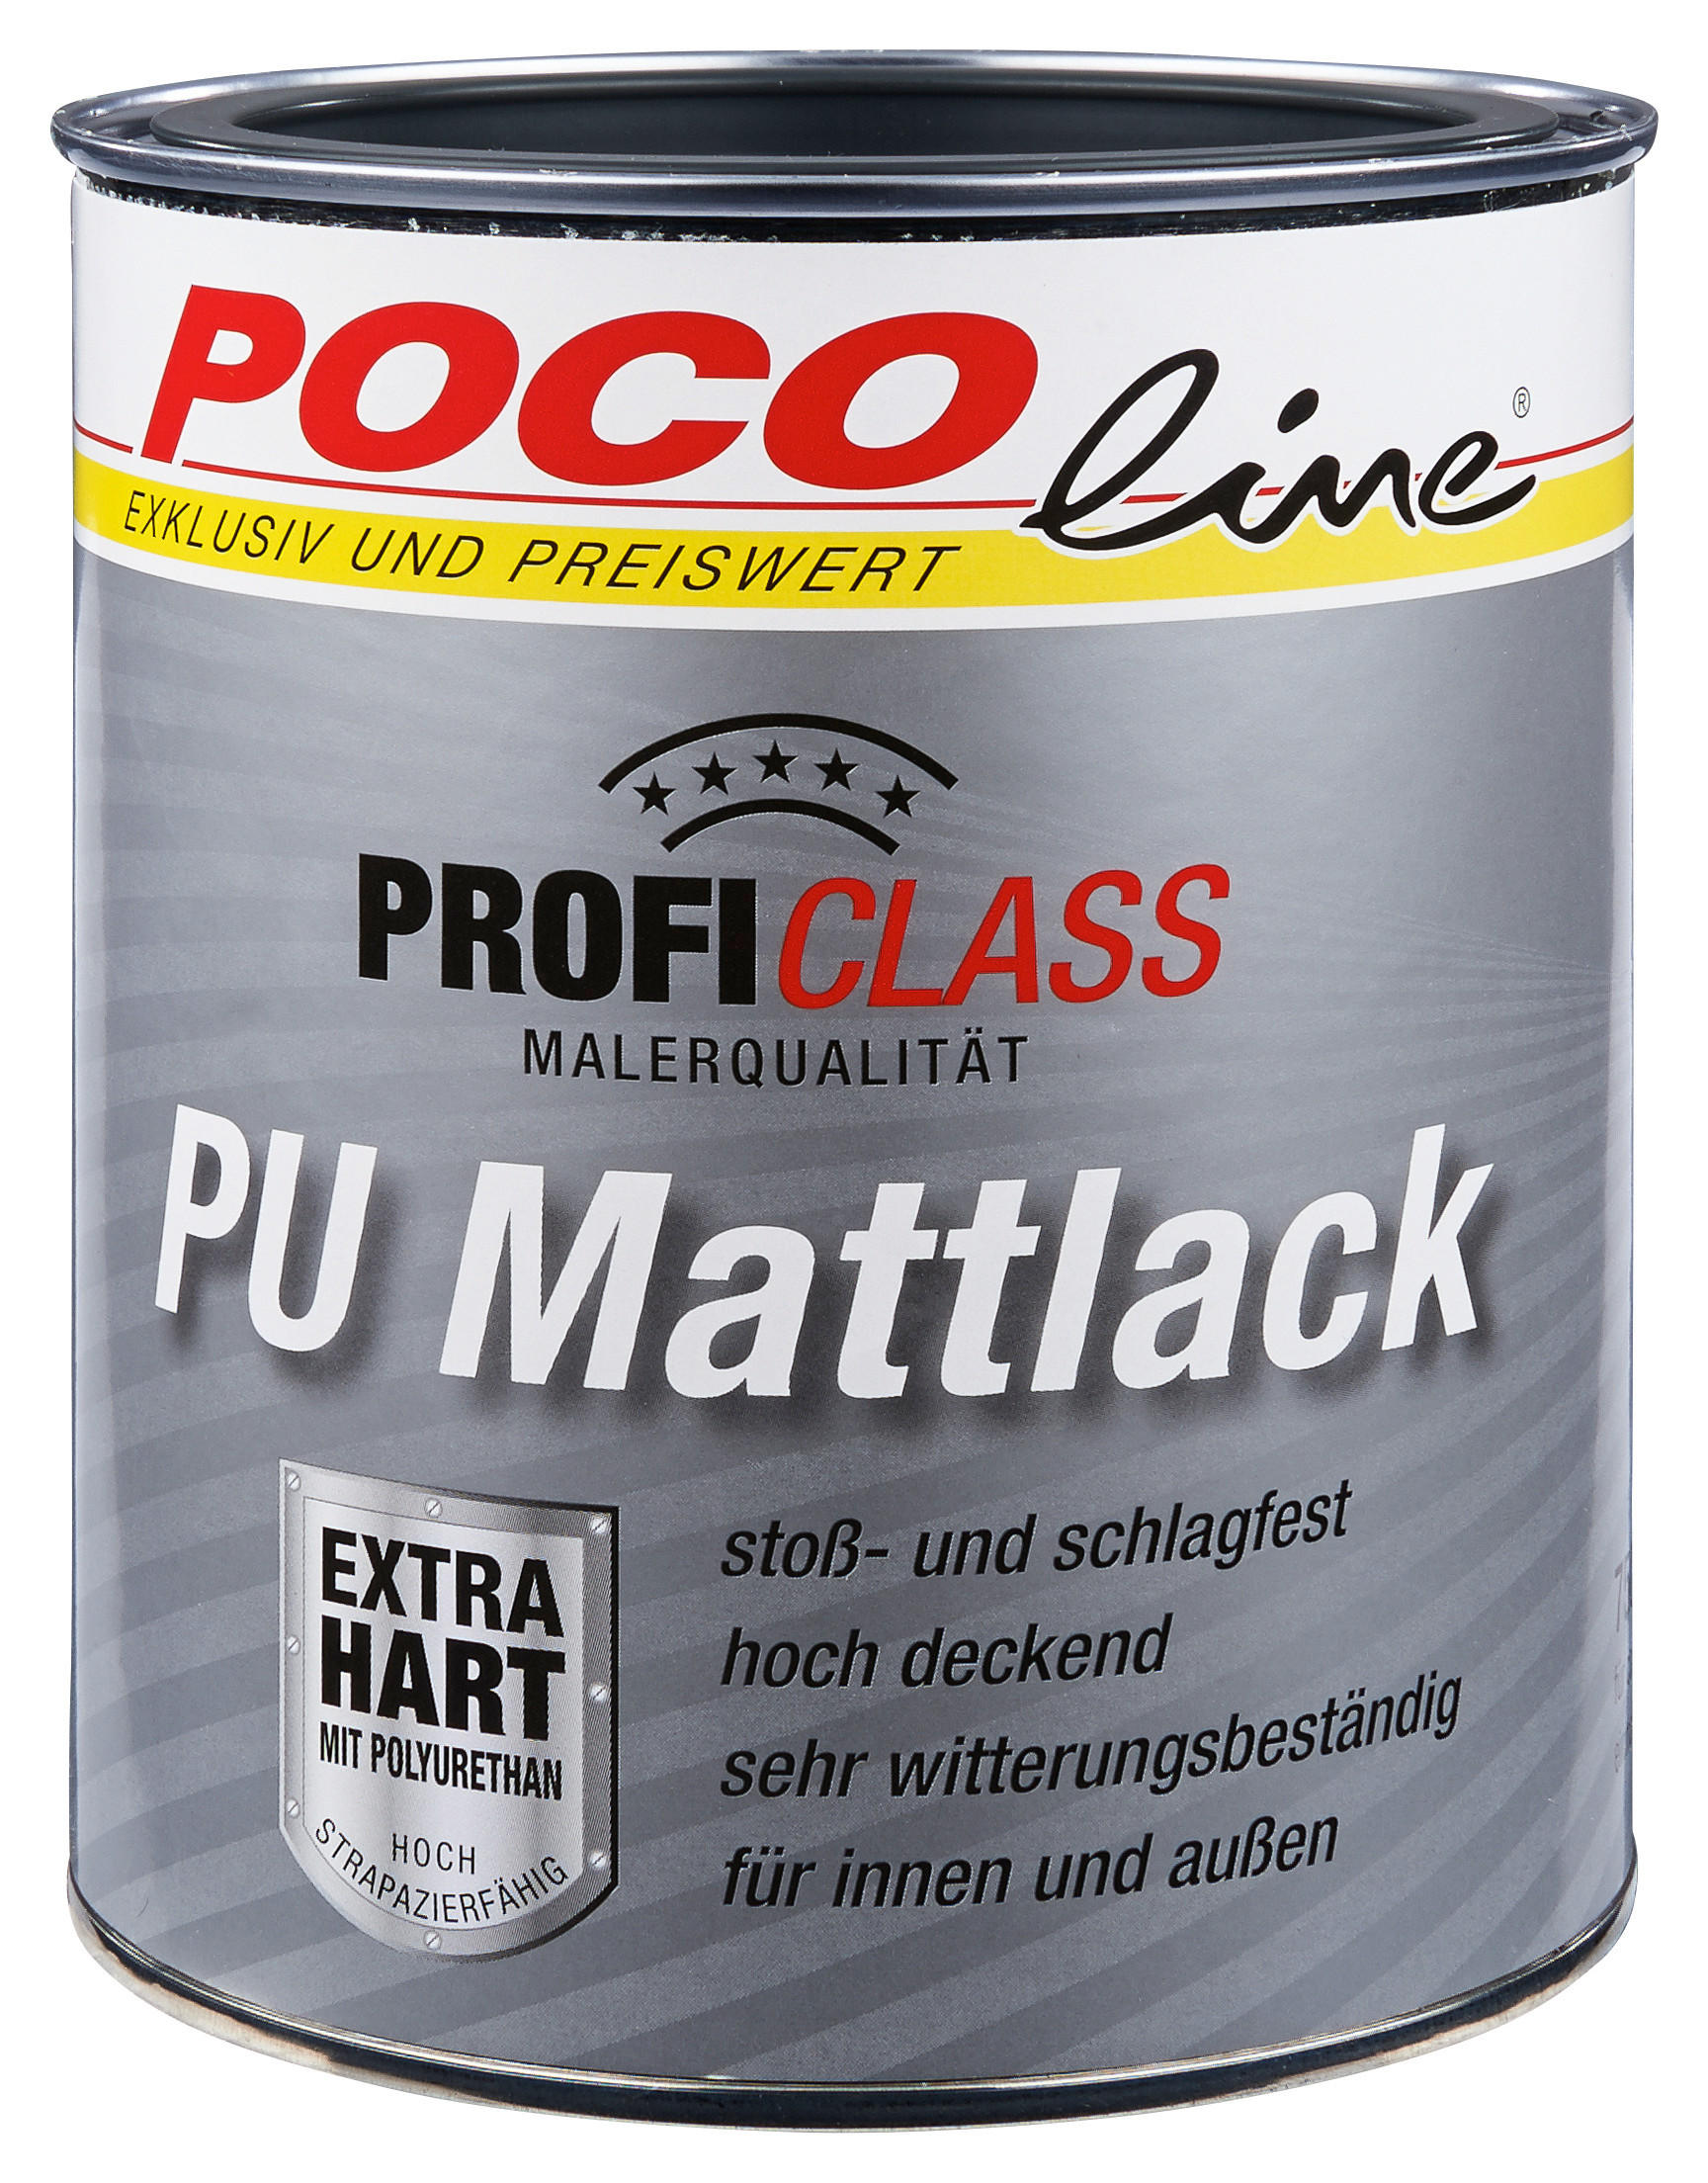 ProfiClass PU-Buntlack anthrazit matt ca. 0,75 l PU-Mattlack_ProfiClass 750ml - anthrazit (750ml)